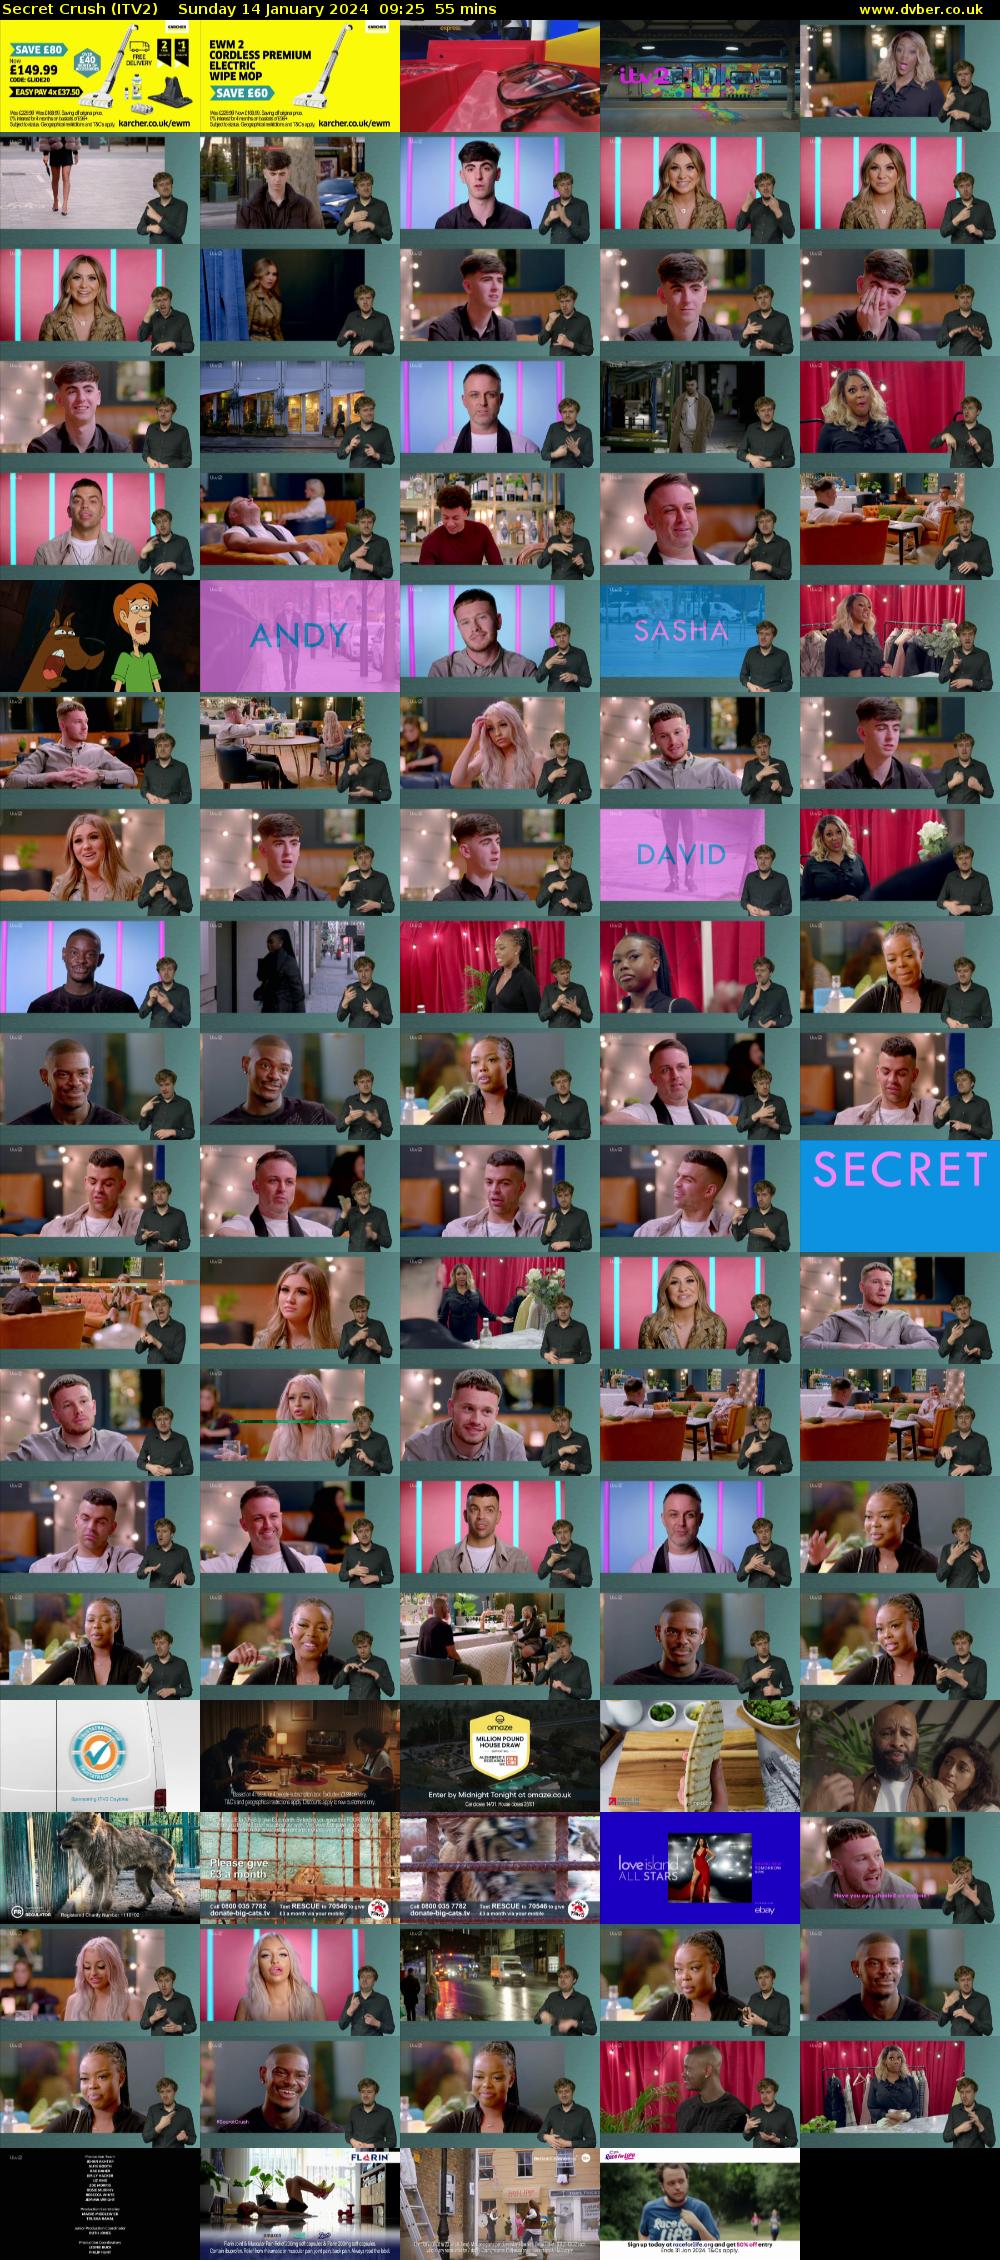 Secret Crush (ITV2) Sunday 14 January 2024 09:25 - 10:20